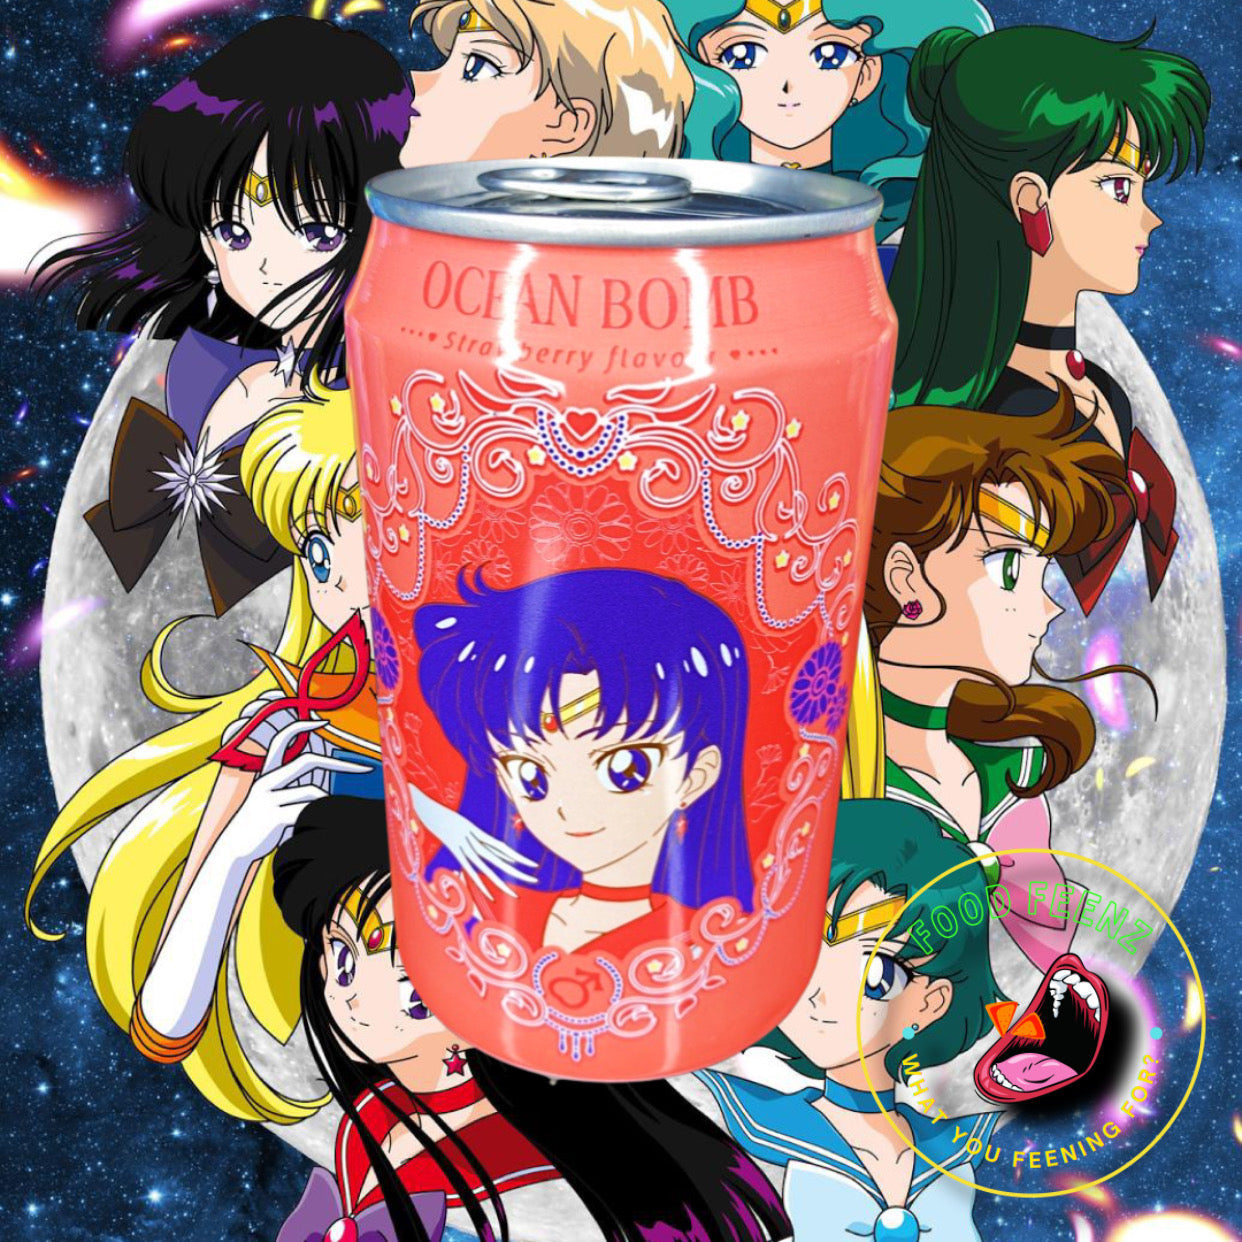 Sailor Moon Ocean Bomb Strawberry Flavor (Taiwan)